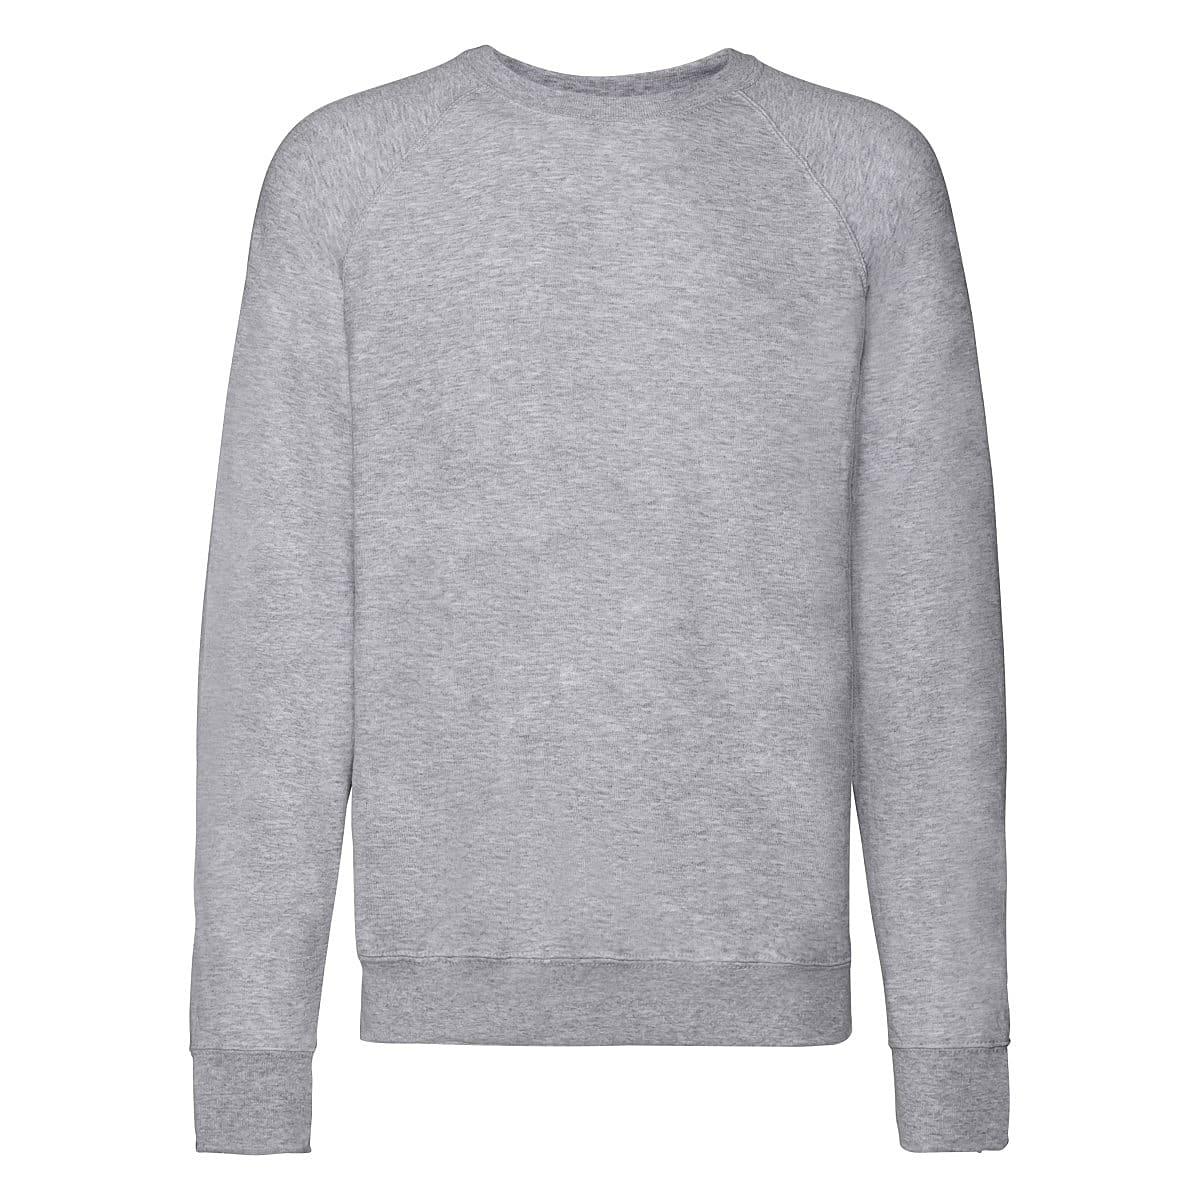 Fruit Of The Loom Mens Lightweight Raglan Sweater in Heather Grey (Product Code: 62138)